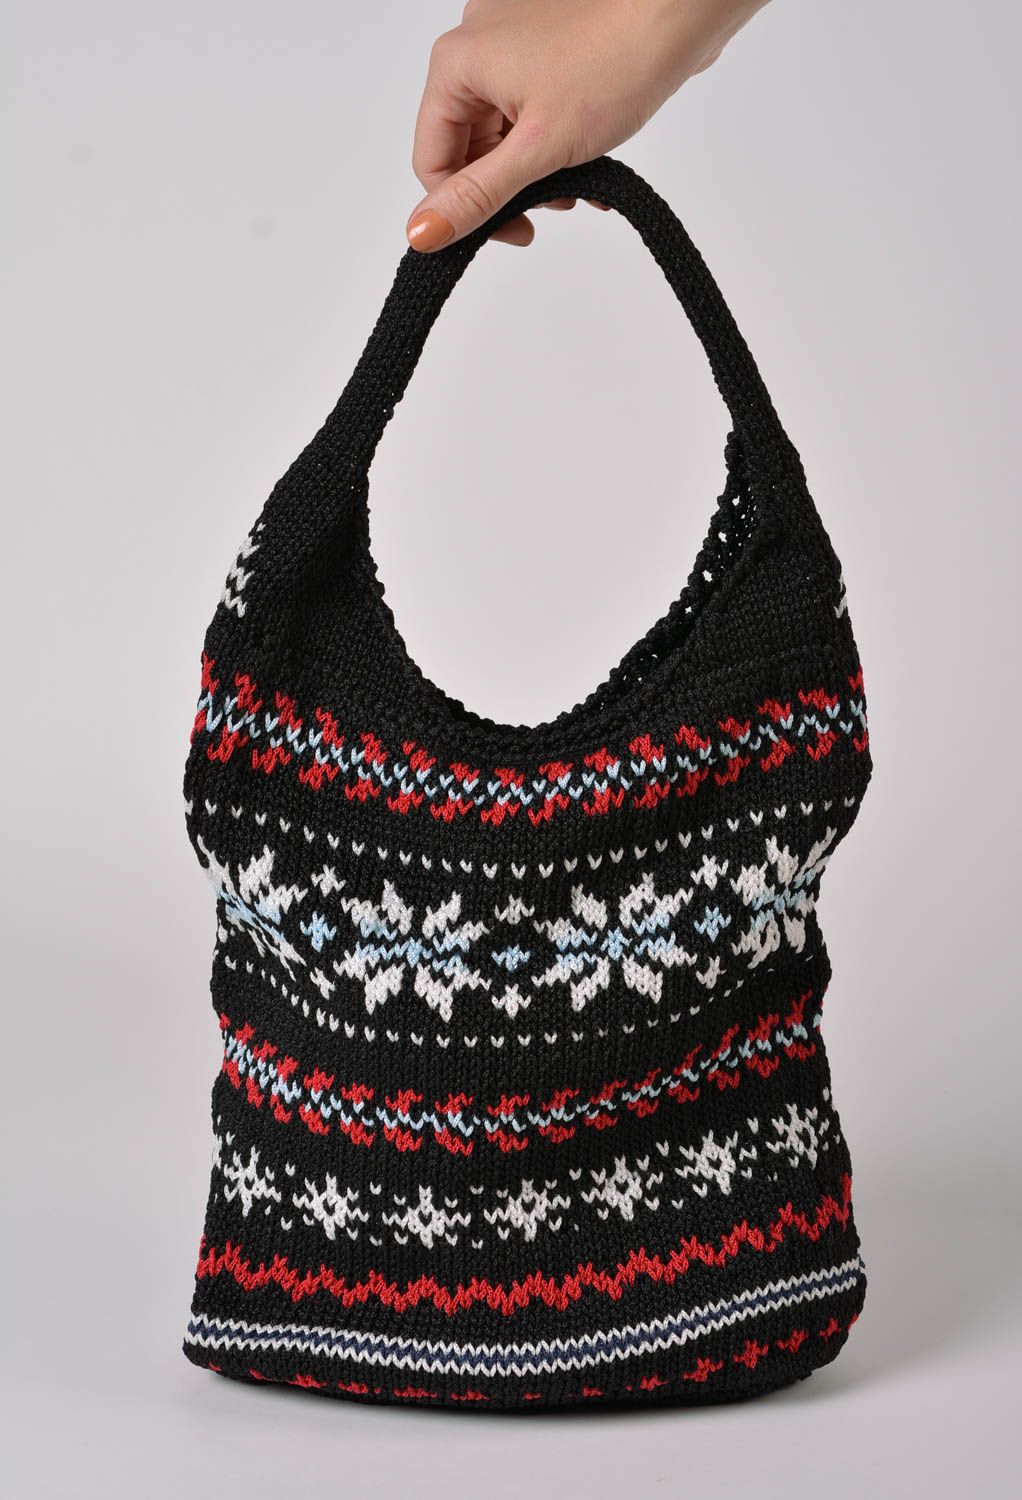 Crocheted female handbag of dark red color with black lining handmade purse photo 2